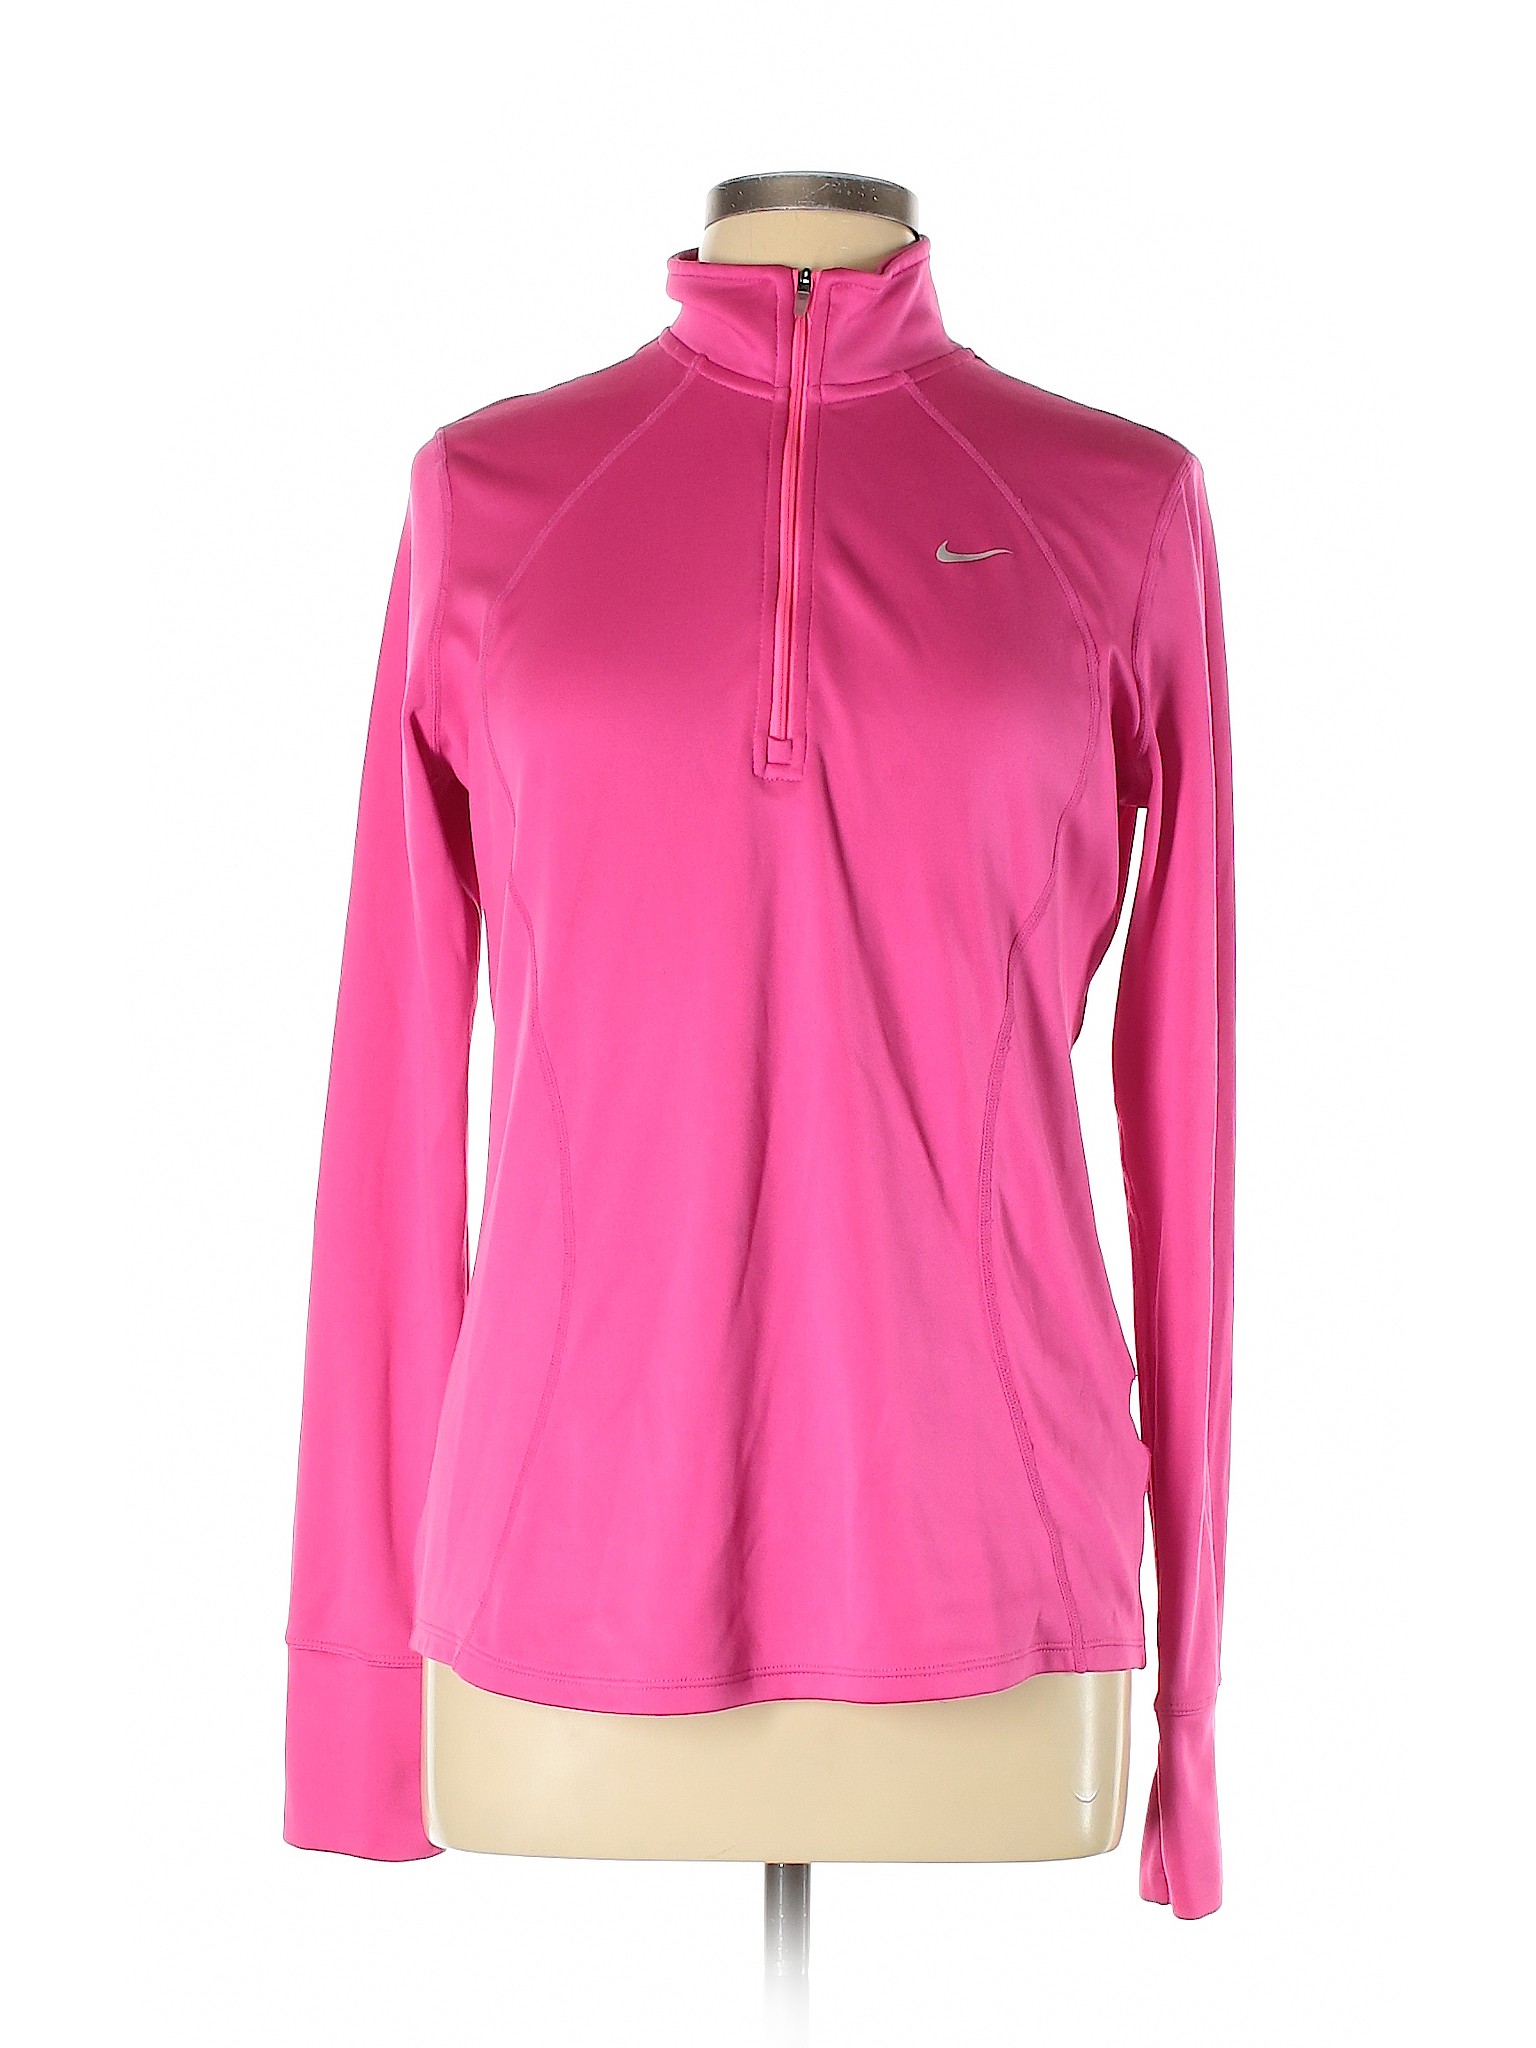 Nike Women Pink Track Jacket L | eBay